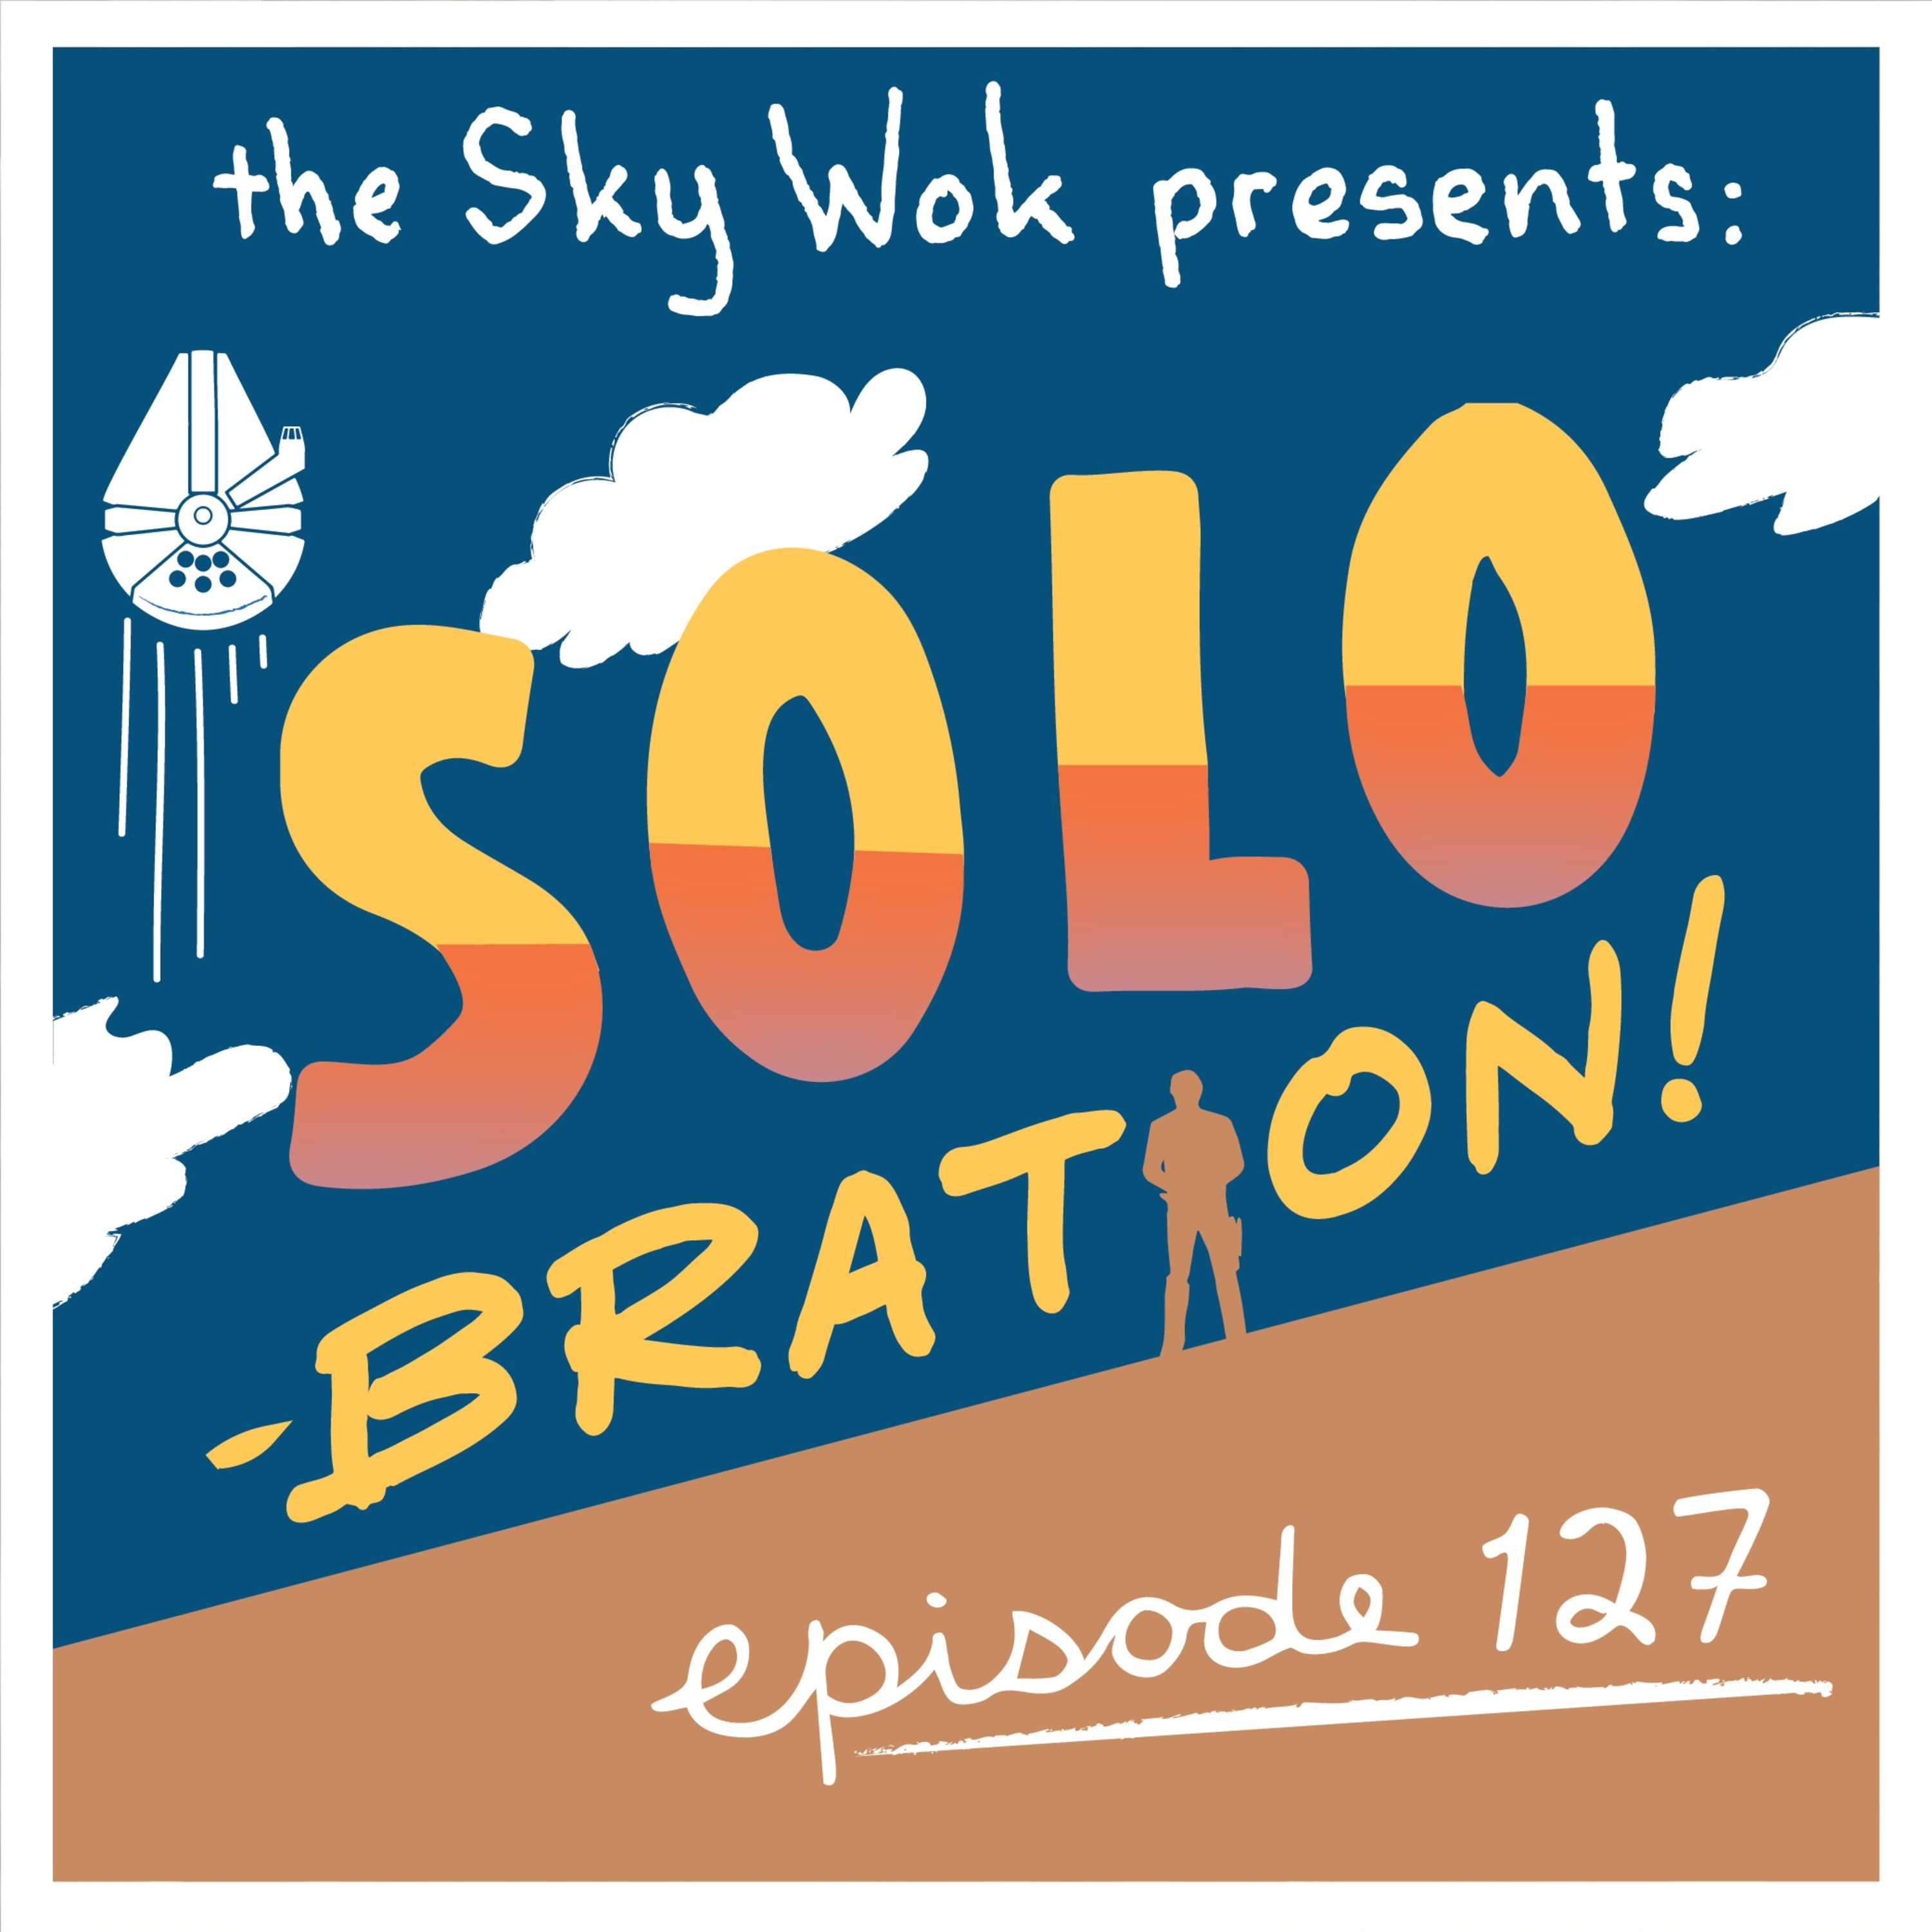 Episode 127 - SOLO-bration!